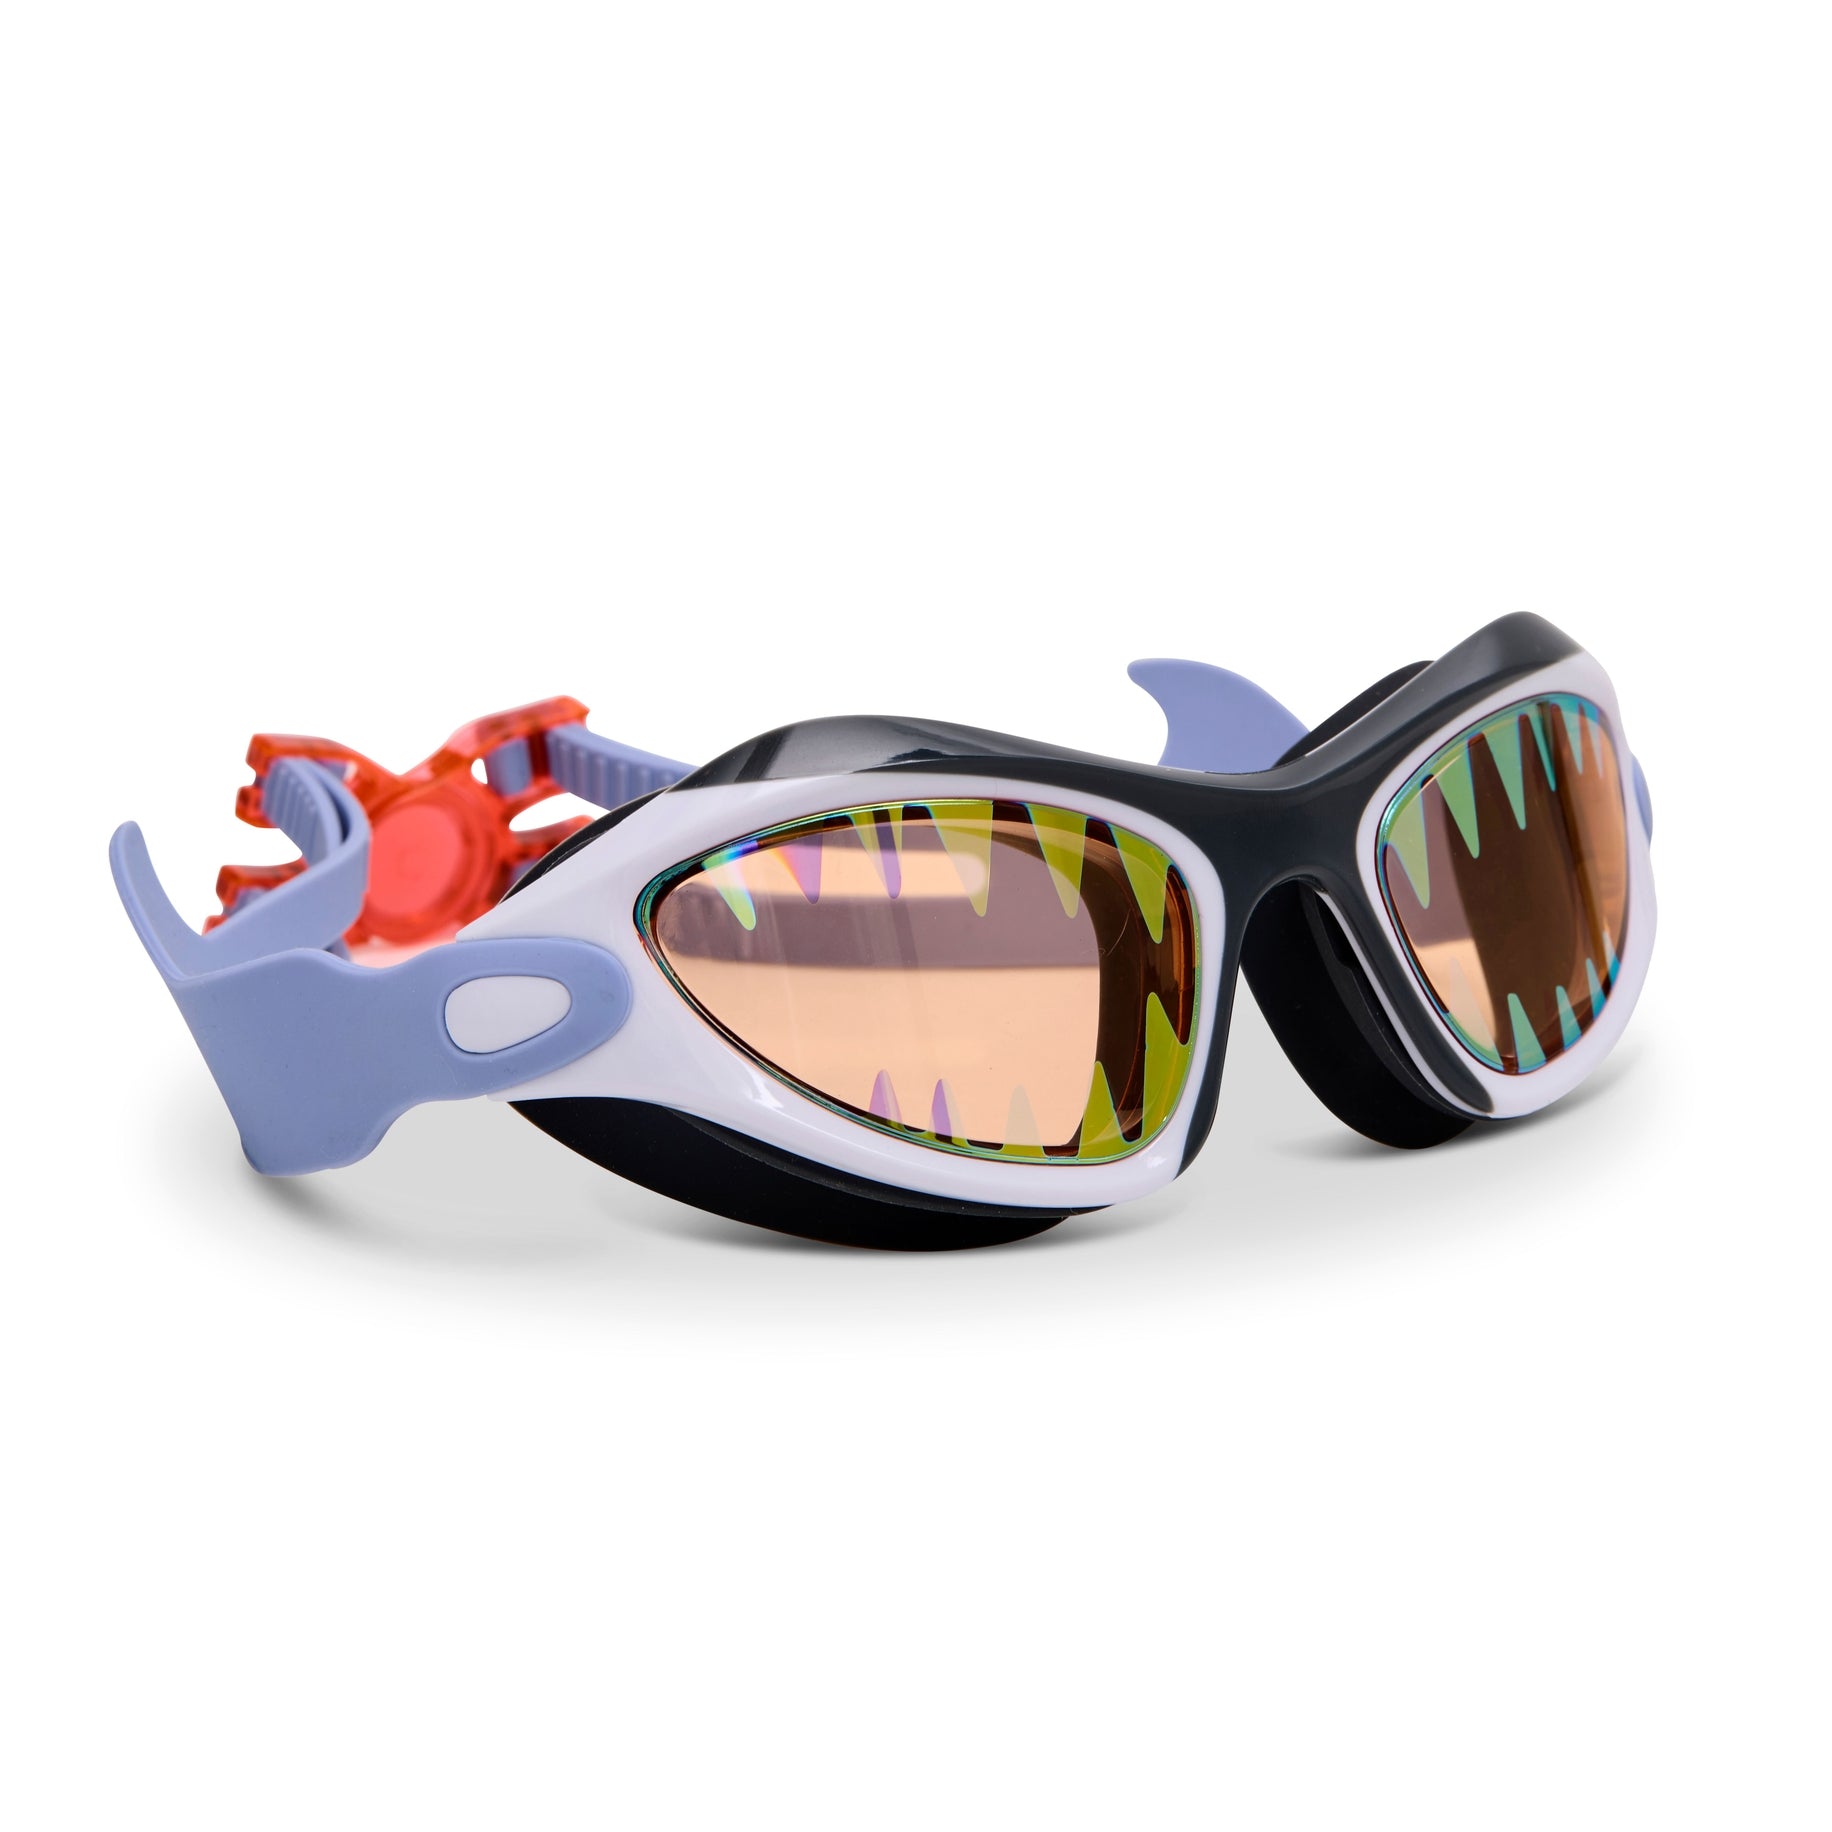 Bling2o Swim Goggles - Megamouth Shark